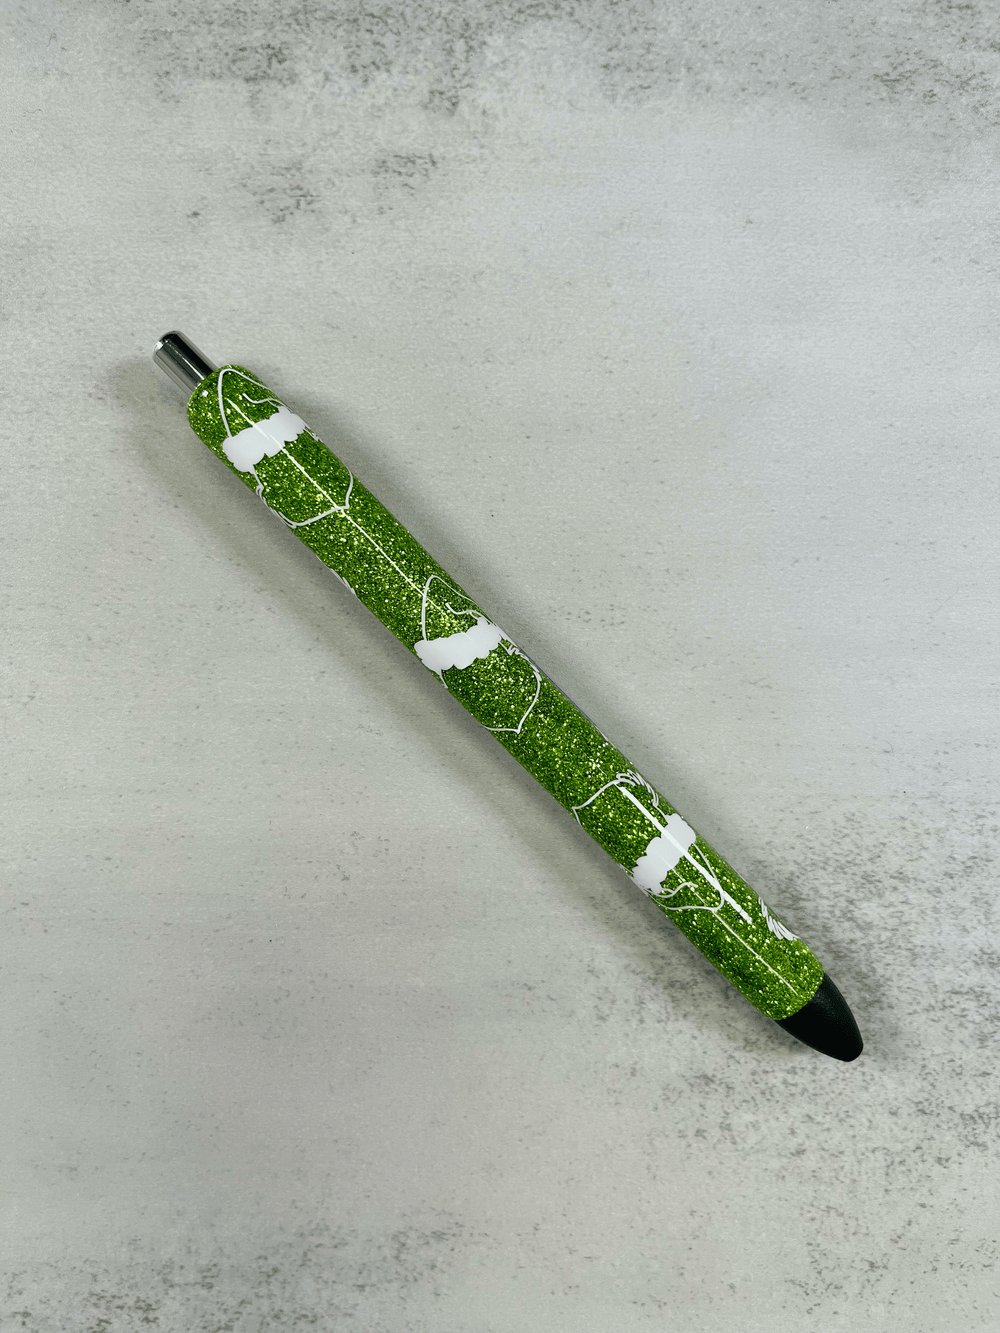 Glitter Pen - Affirmation Crayons – TuckerStorm